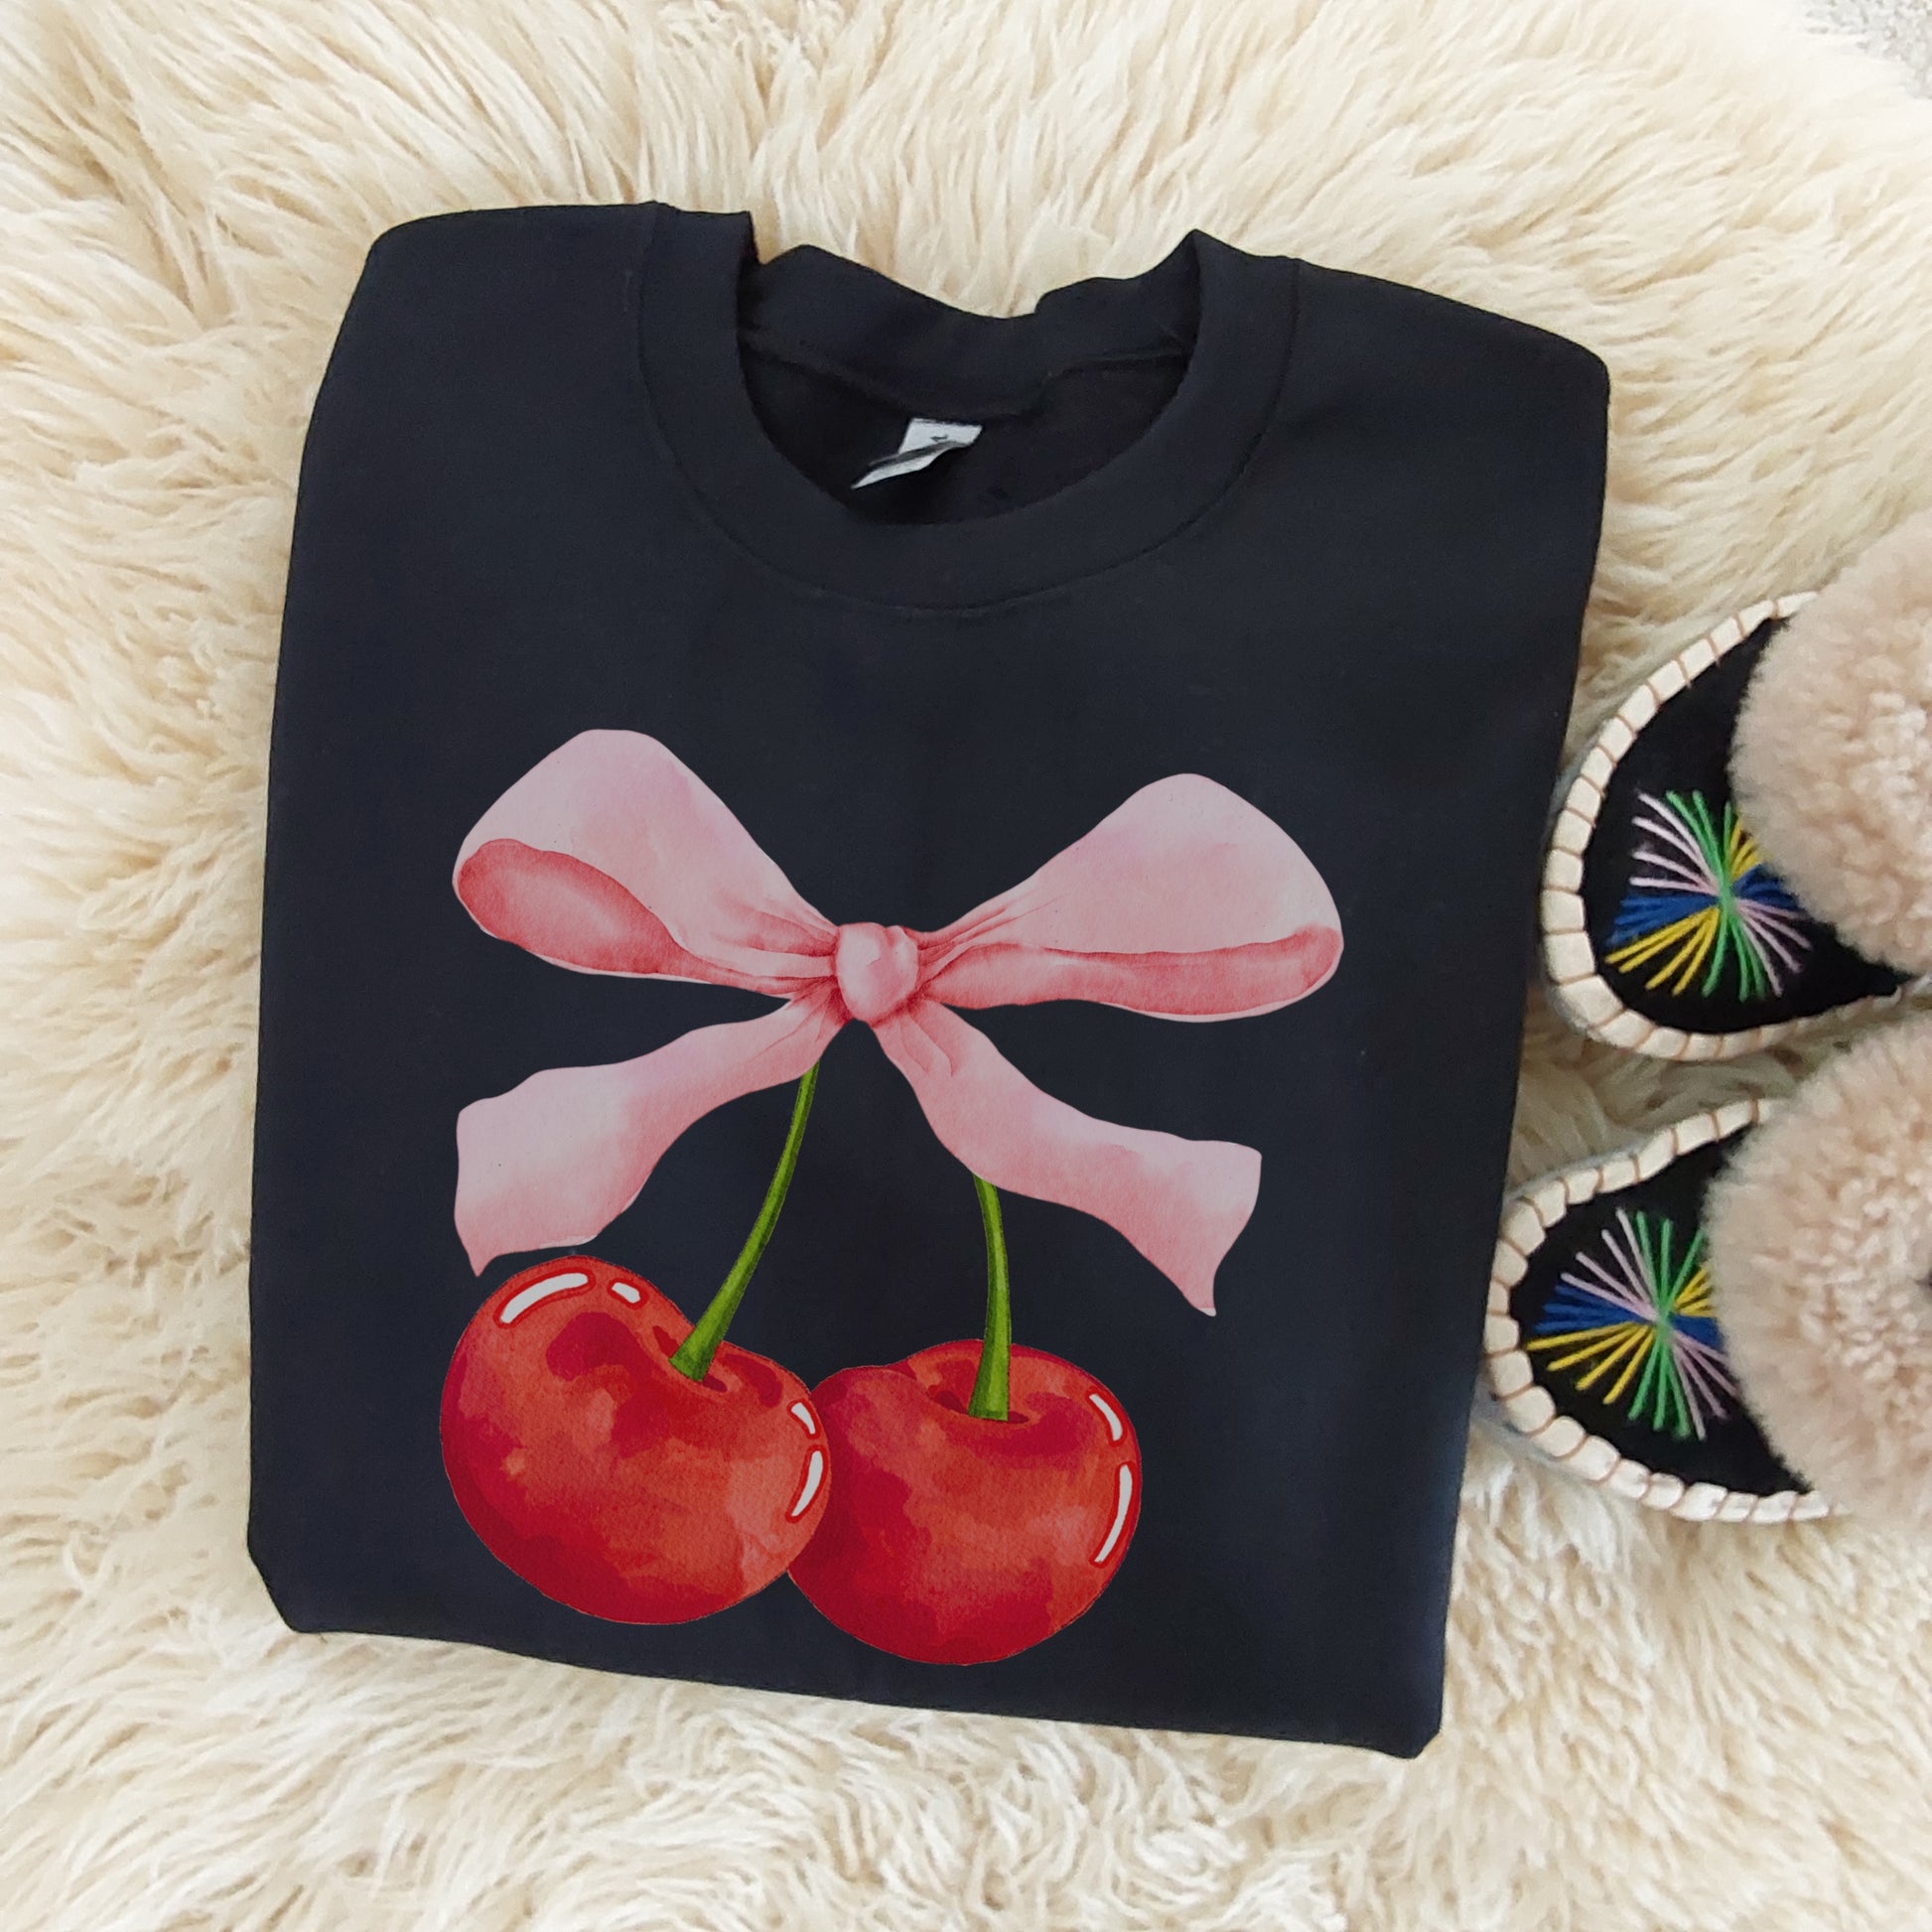 Cherries sweatshirt